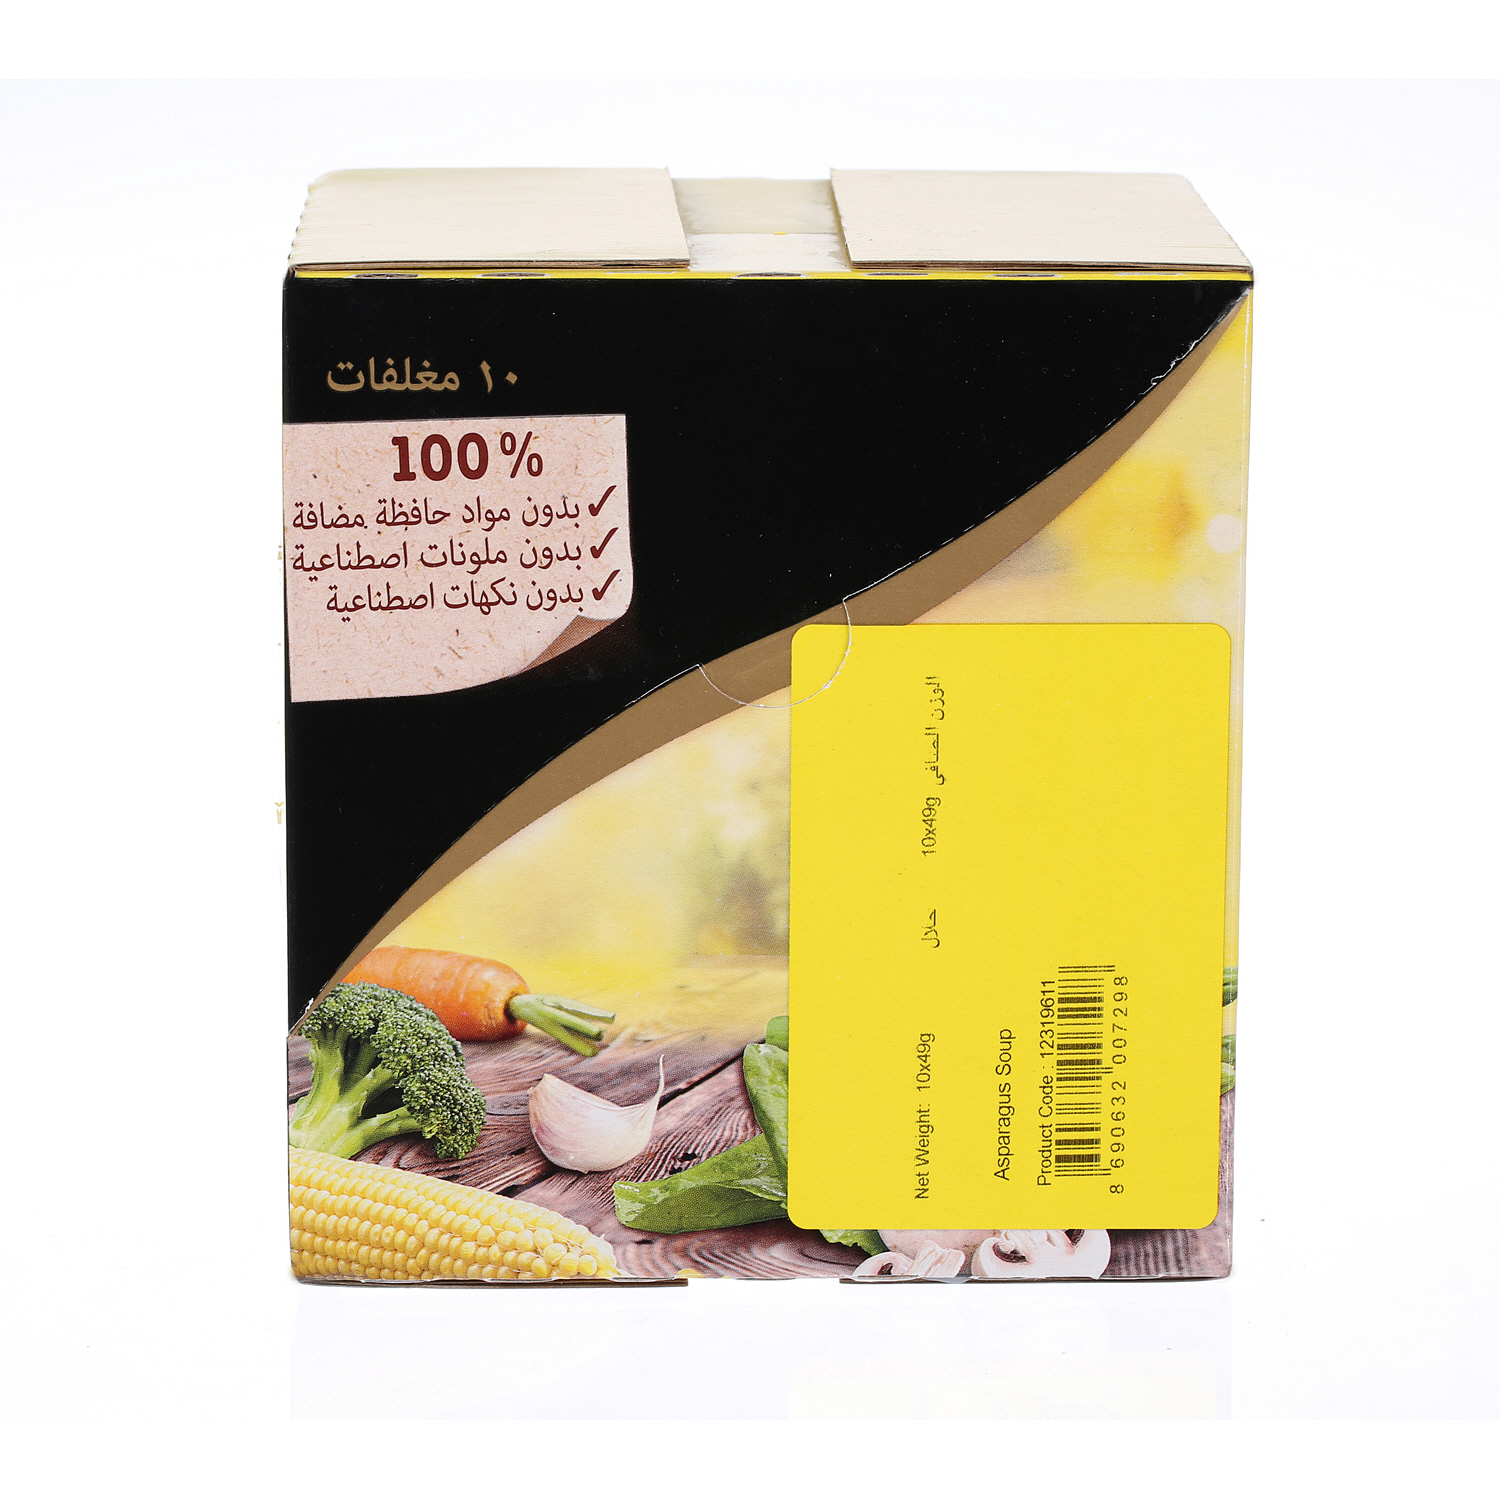 Maggi Excellence Asparagus Soup 49gm × 10'S